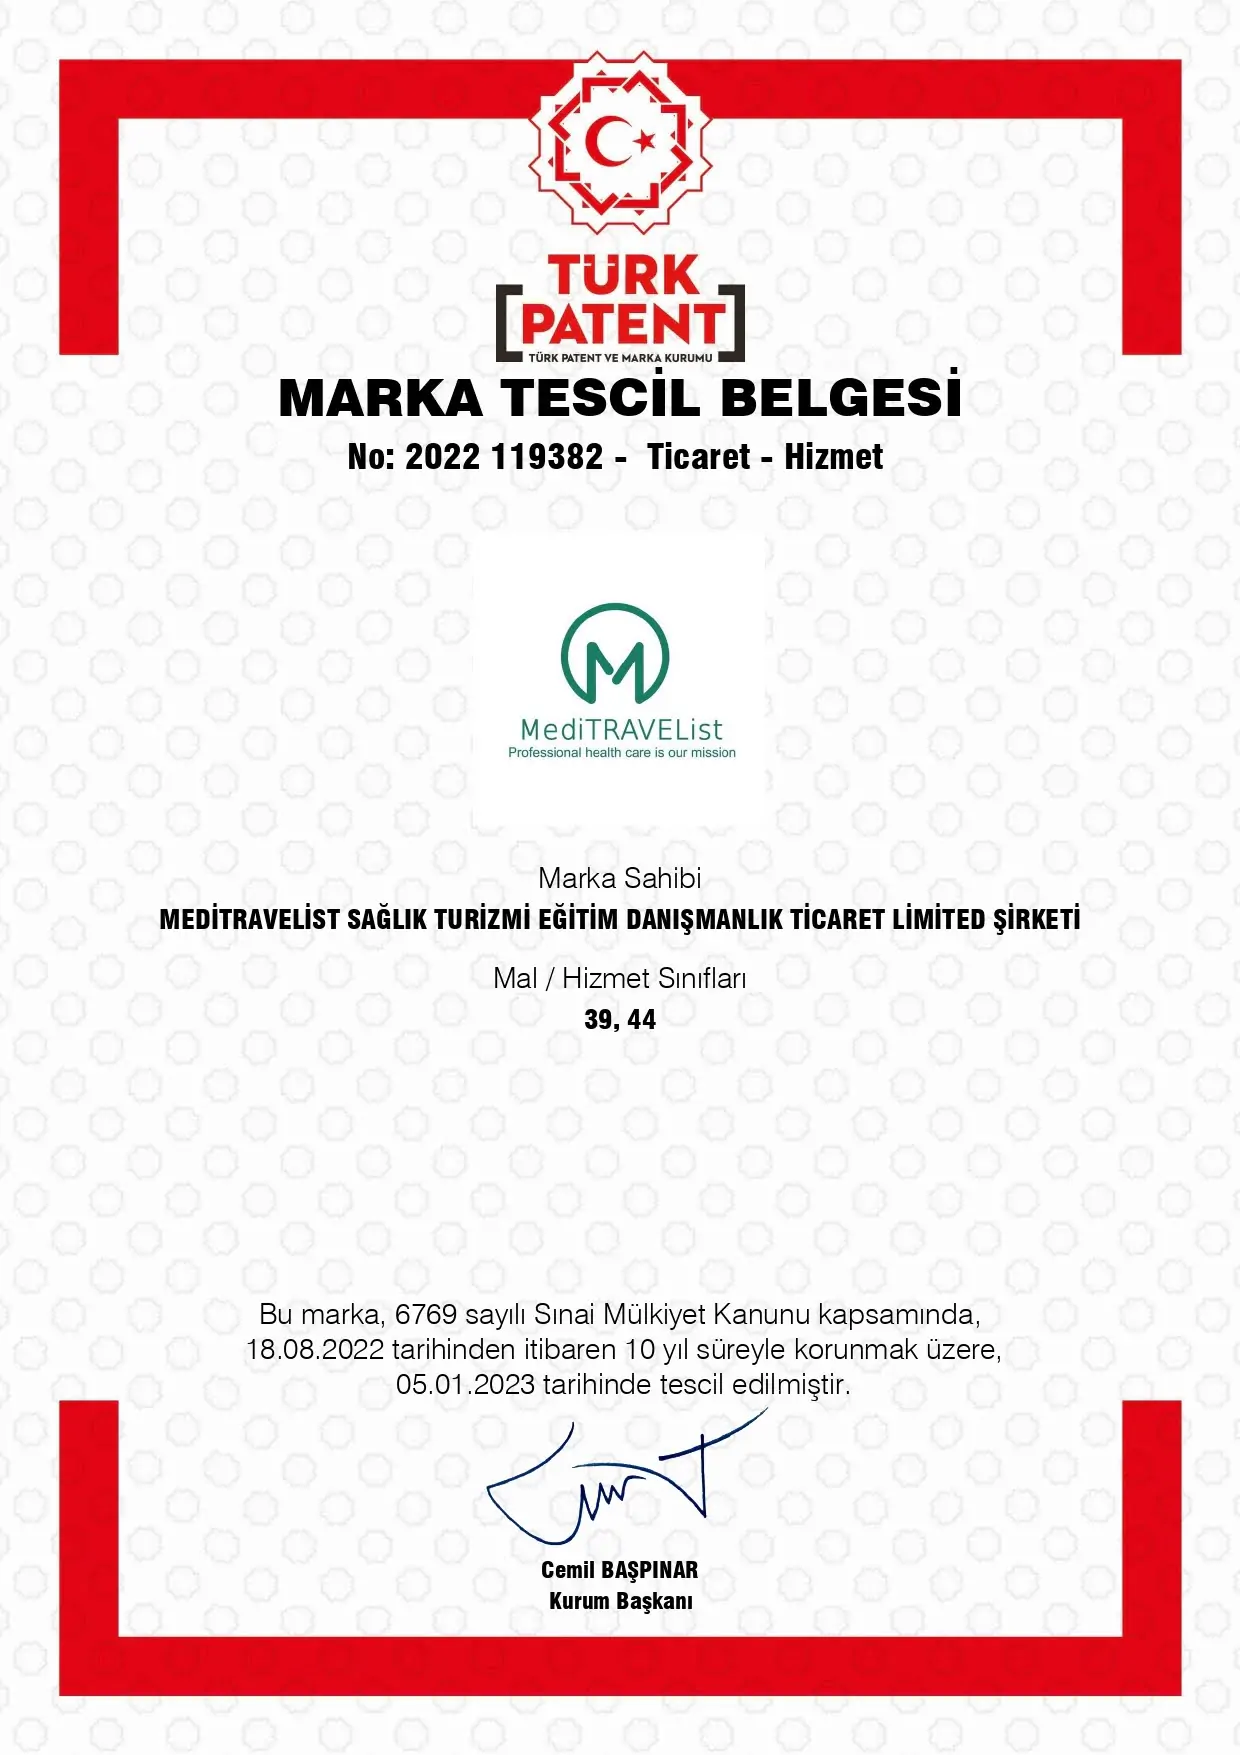 meditravelist trademark registration certificate turkish patent institue